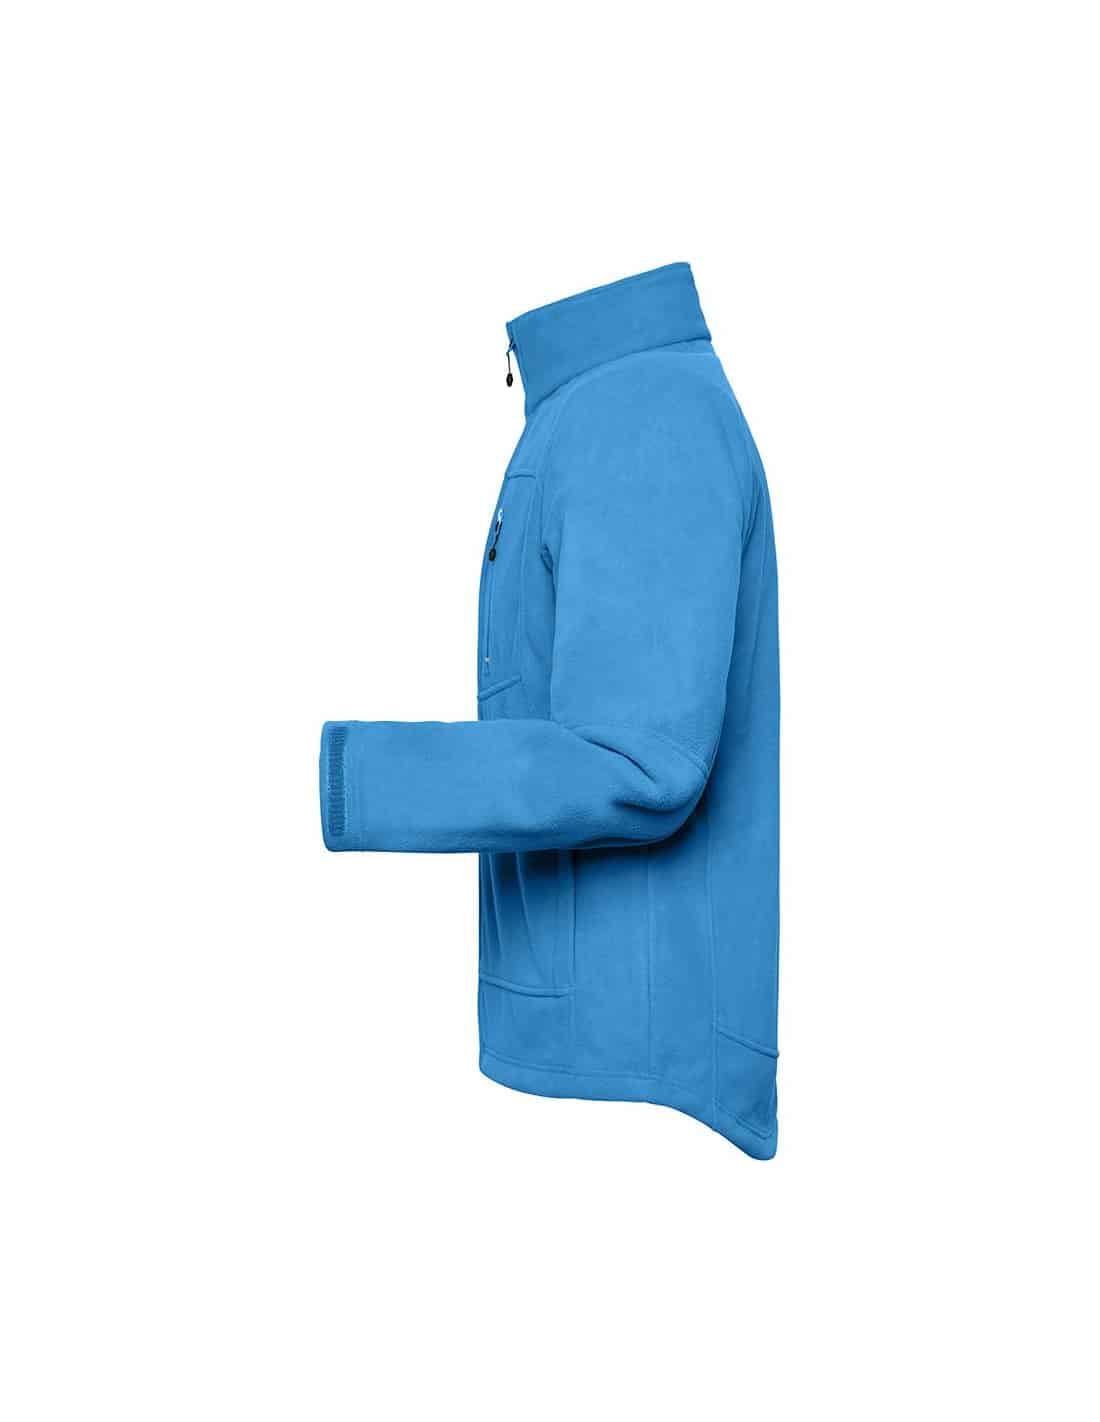 Men?s Bonded Fleece Jacket with 3 layers